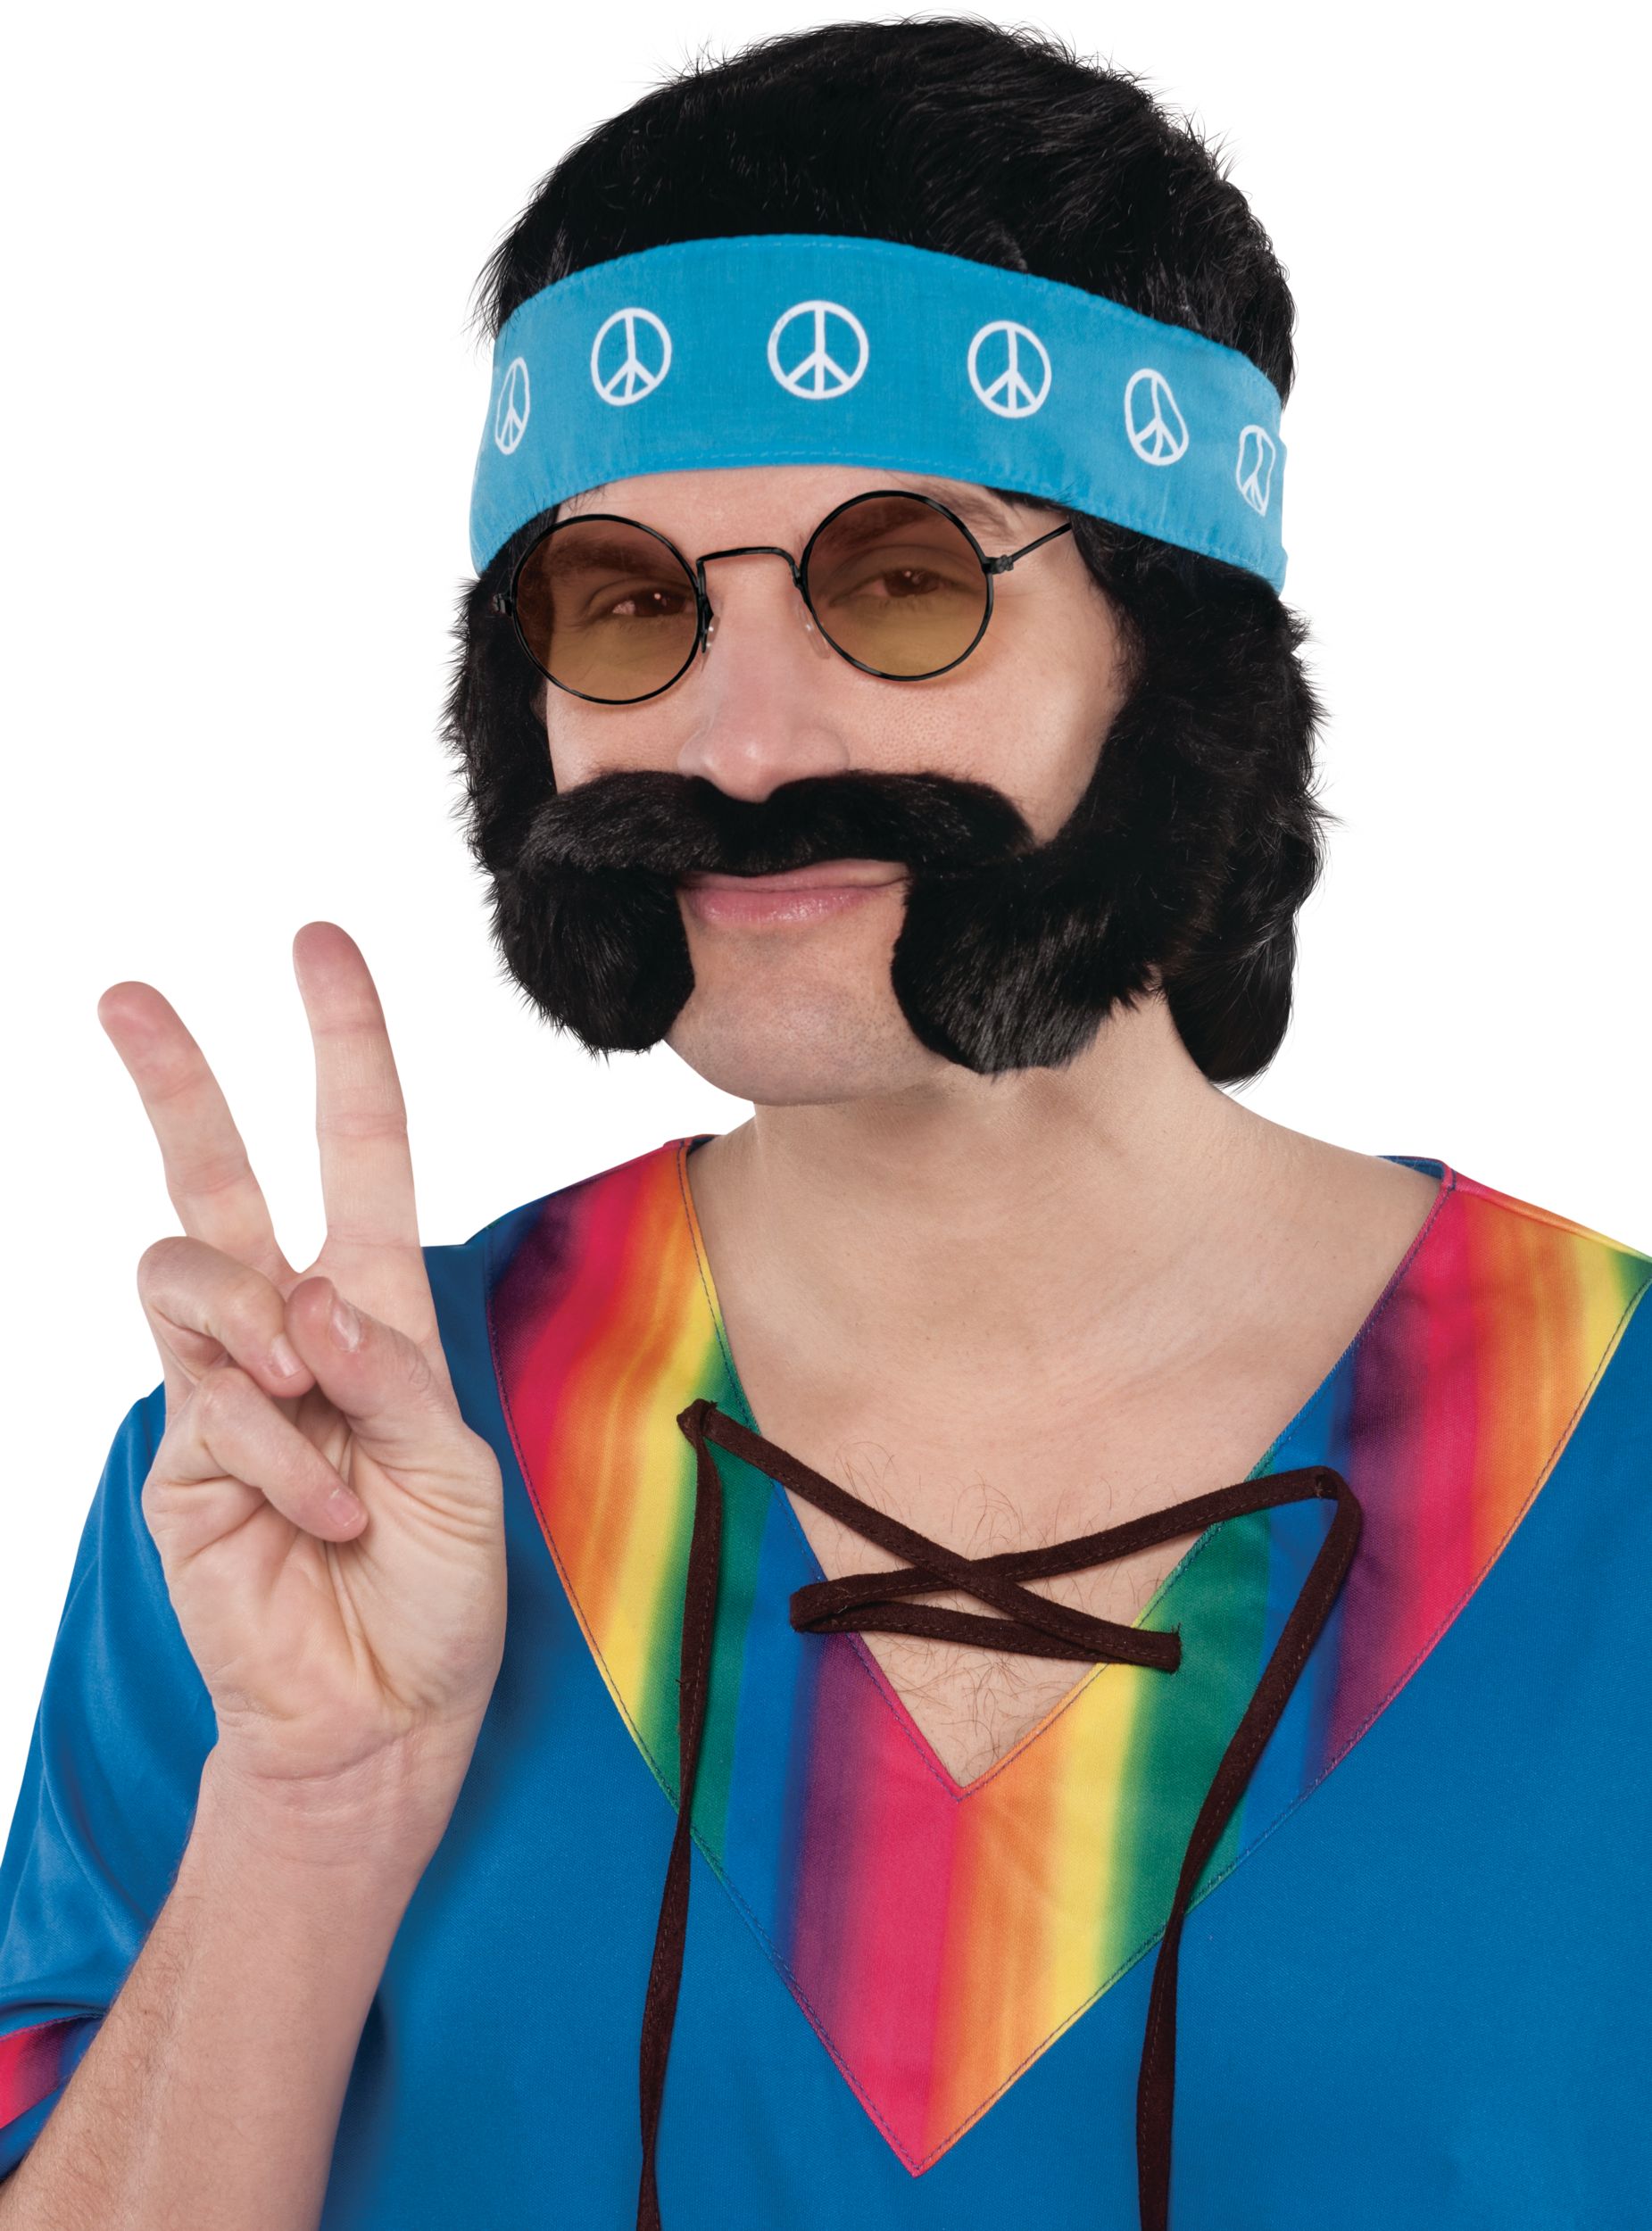 Buy Hippie Halloween Costume Accessory Kit - Cappel's